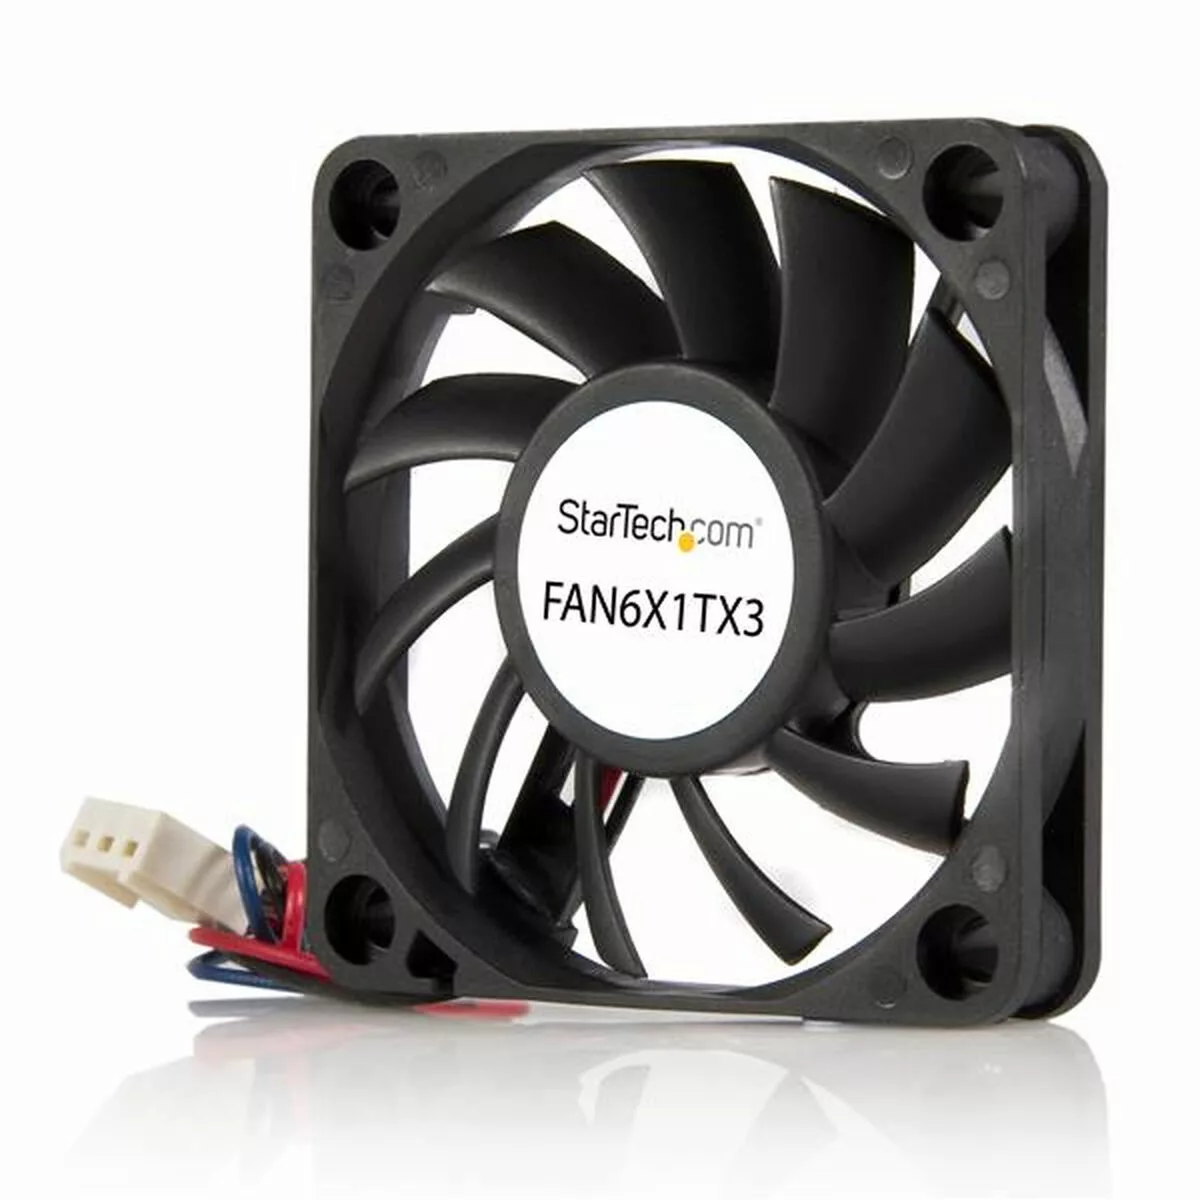 Box Ventilator Startech Fan6x1tx3 günstig online kaufen